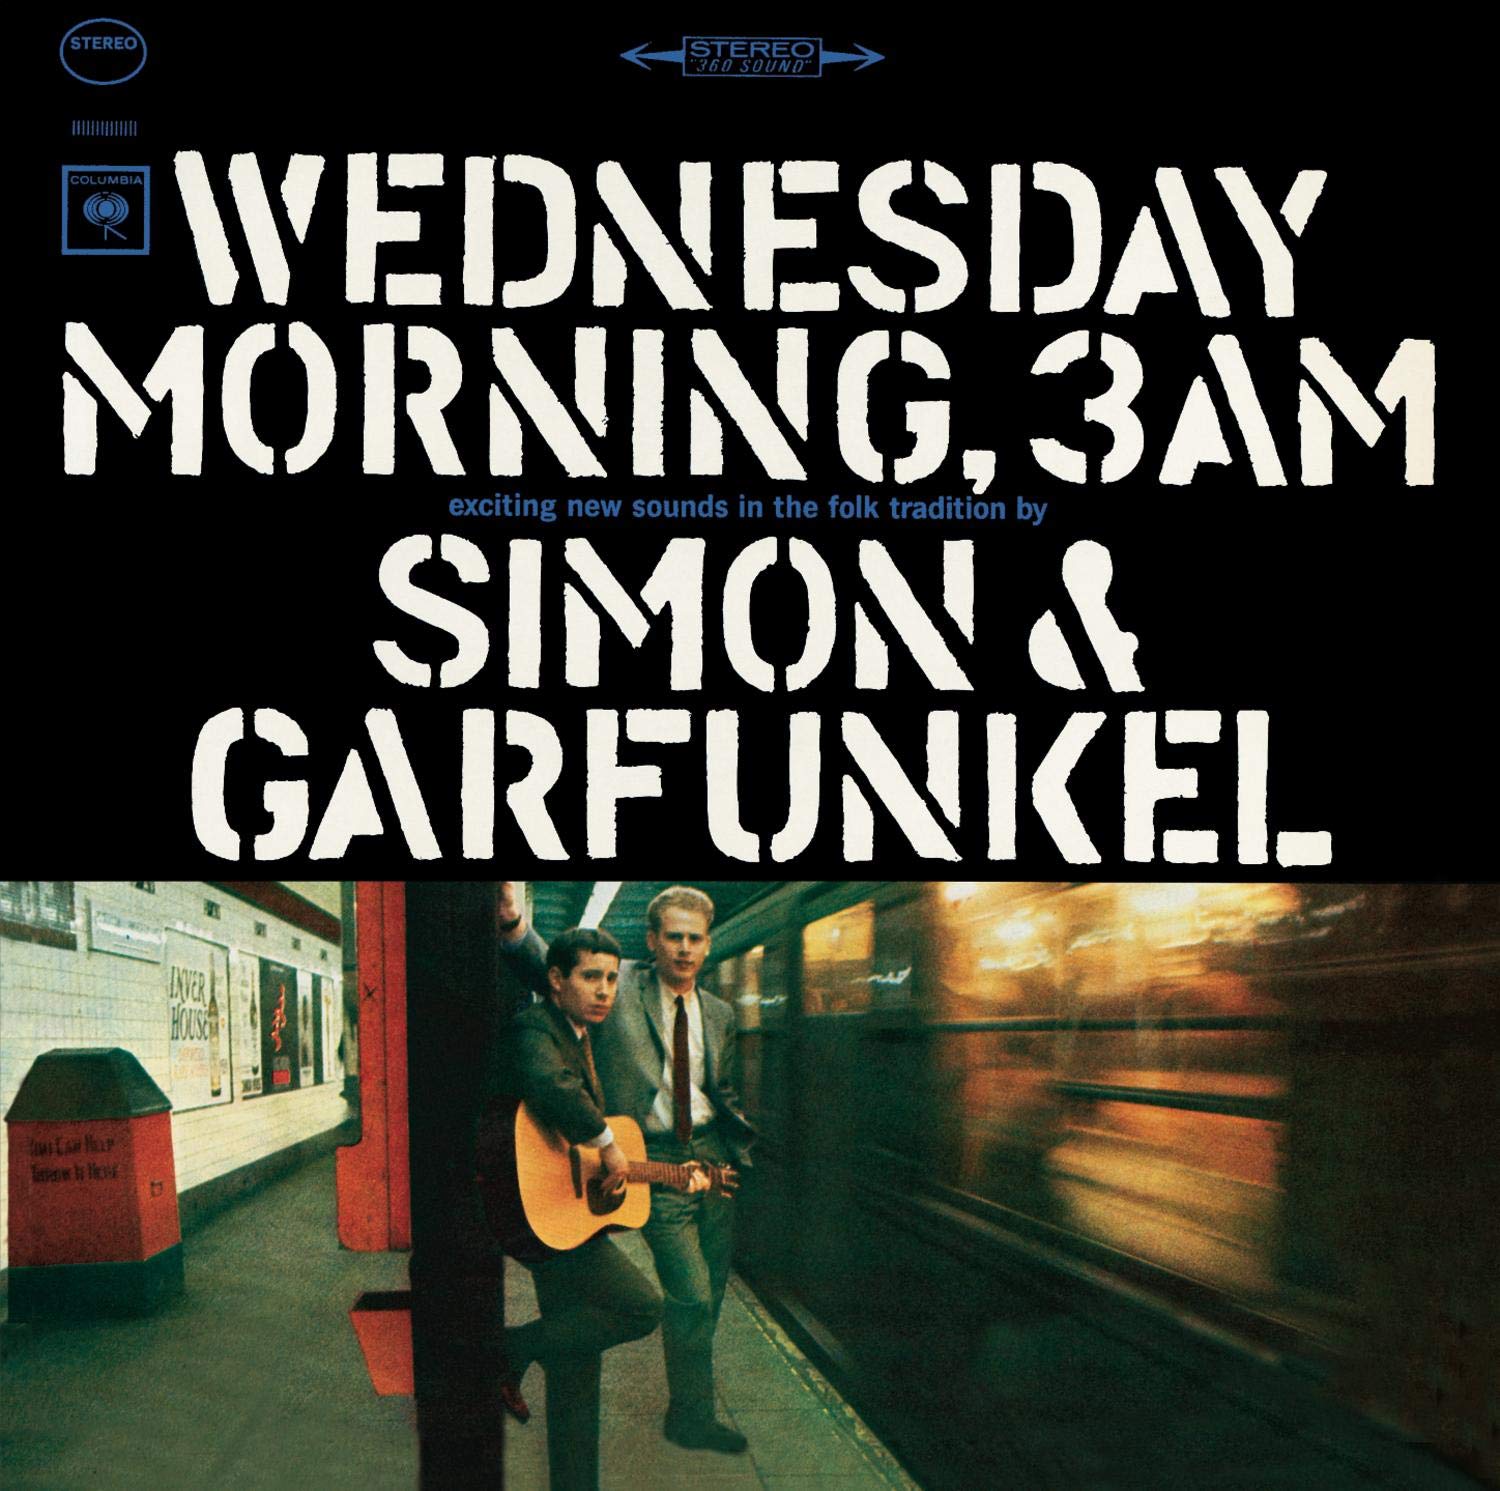 Simon & Garfunkel- Wednesday Morning, 3AM - Darkside Records